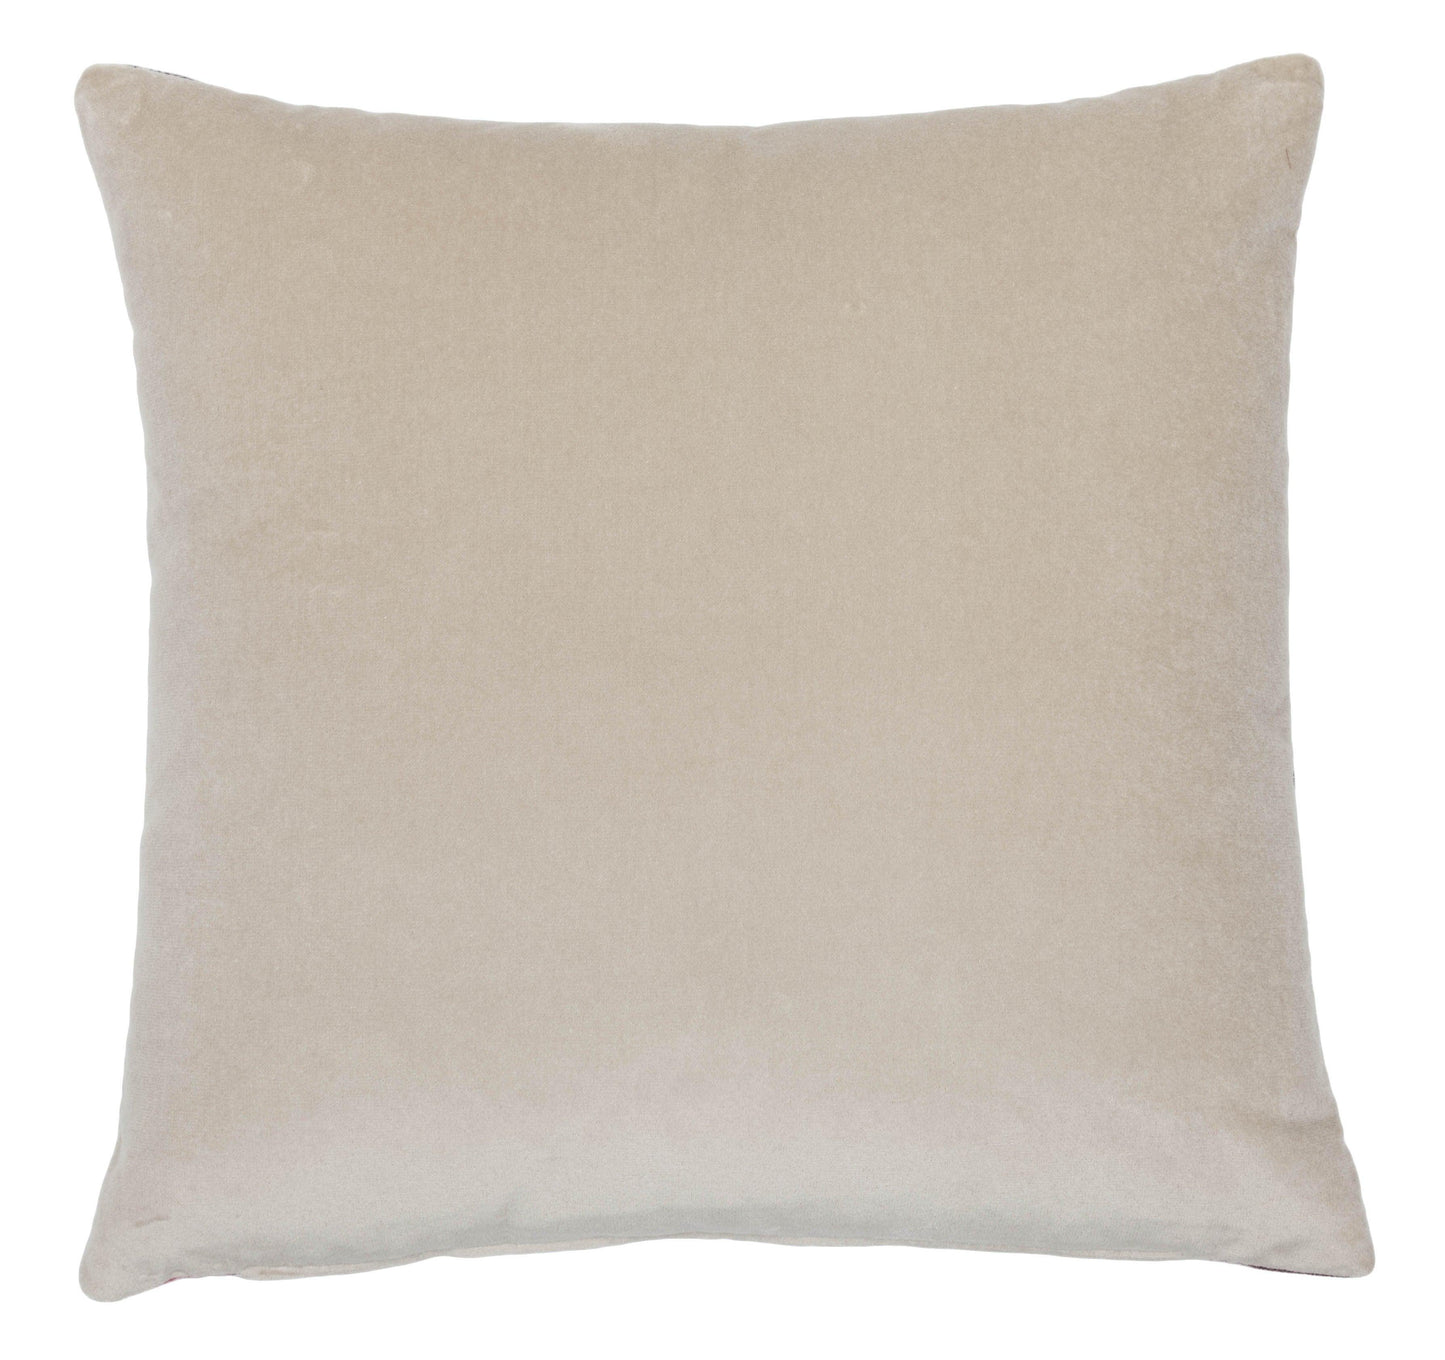 William Morris Chrysanthemum Aqua Tapestry Pillow- 18 inch square Throw Pillows Hines 